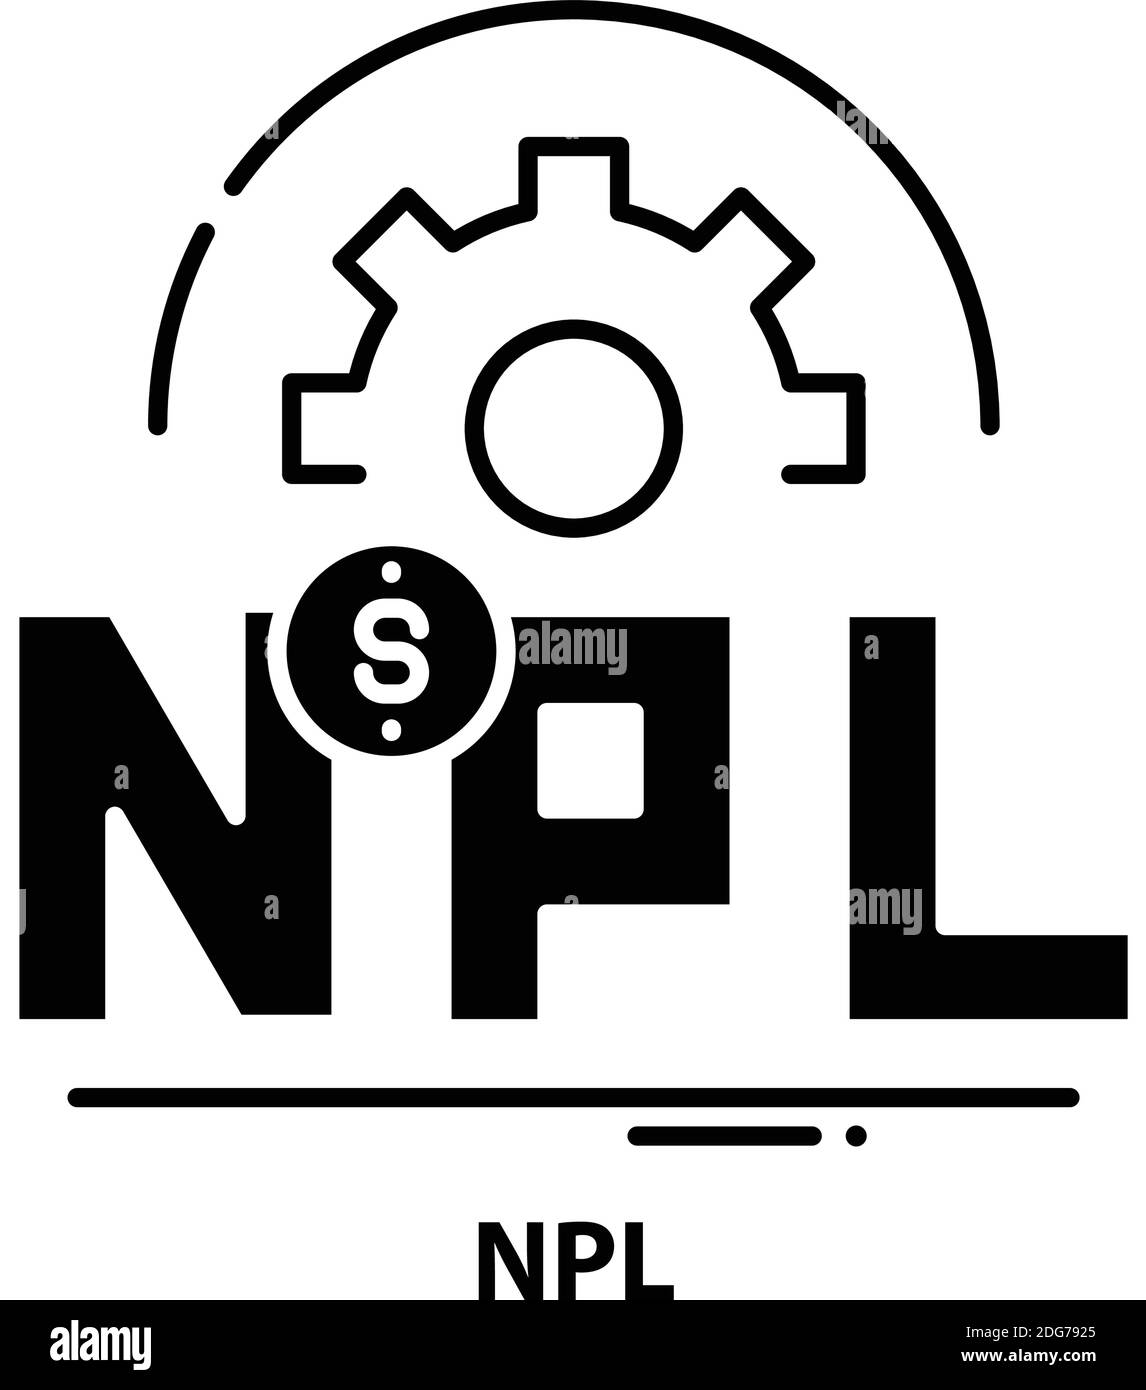 npl icon, black vector sign with editable strokes, concept illustration Stock Vector